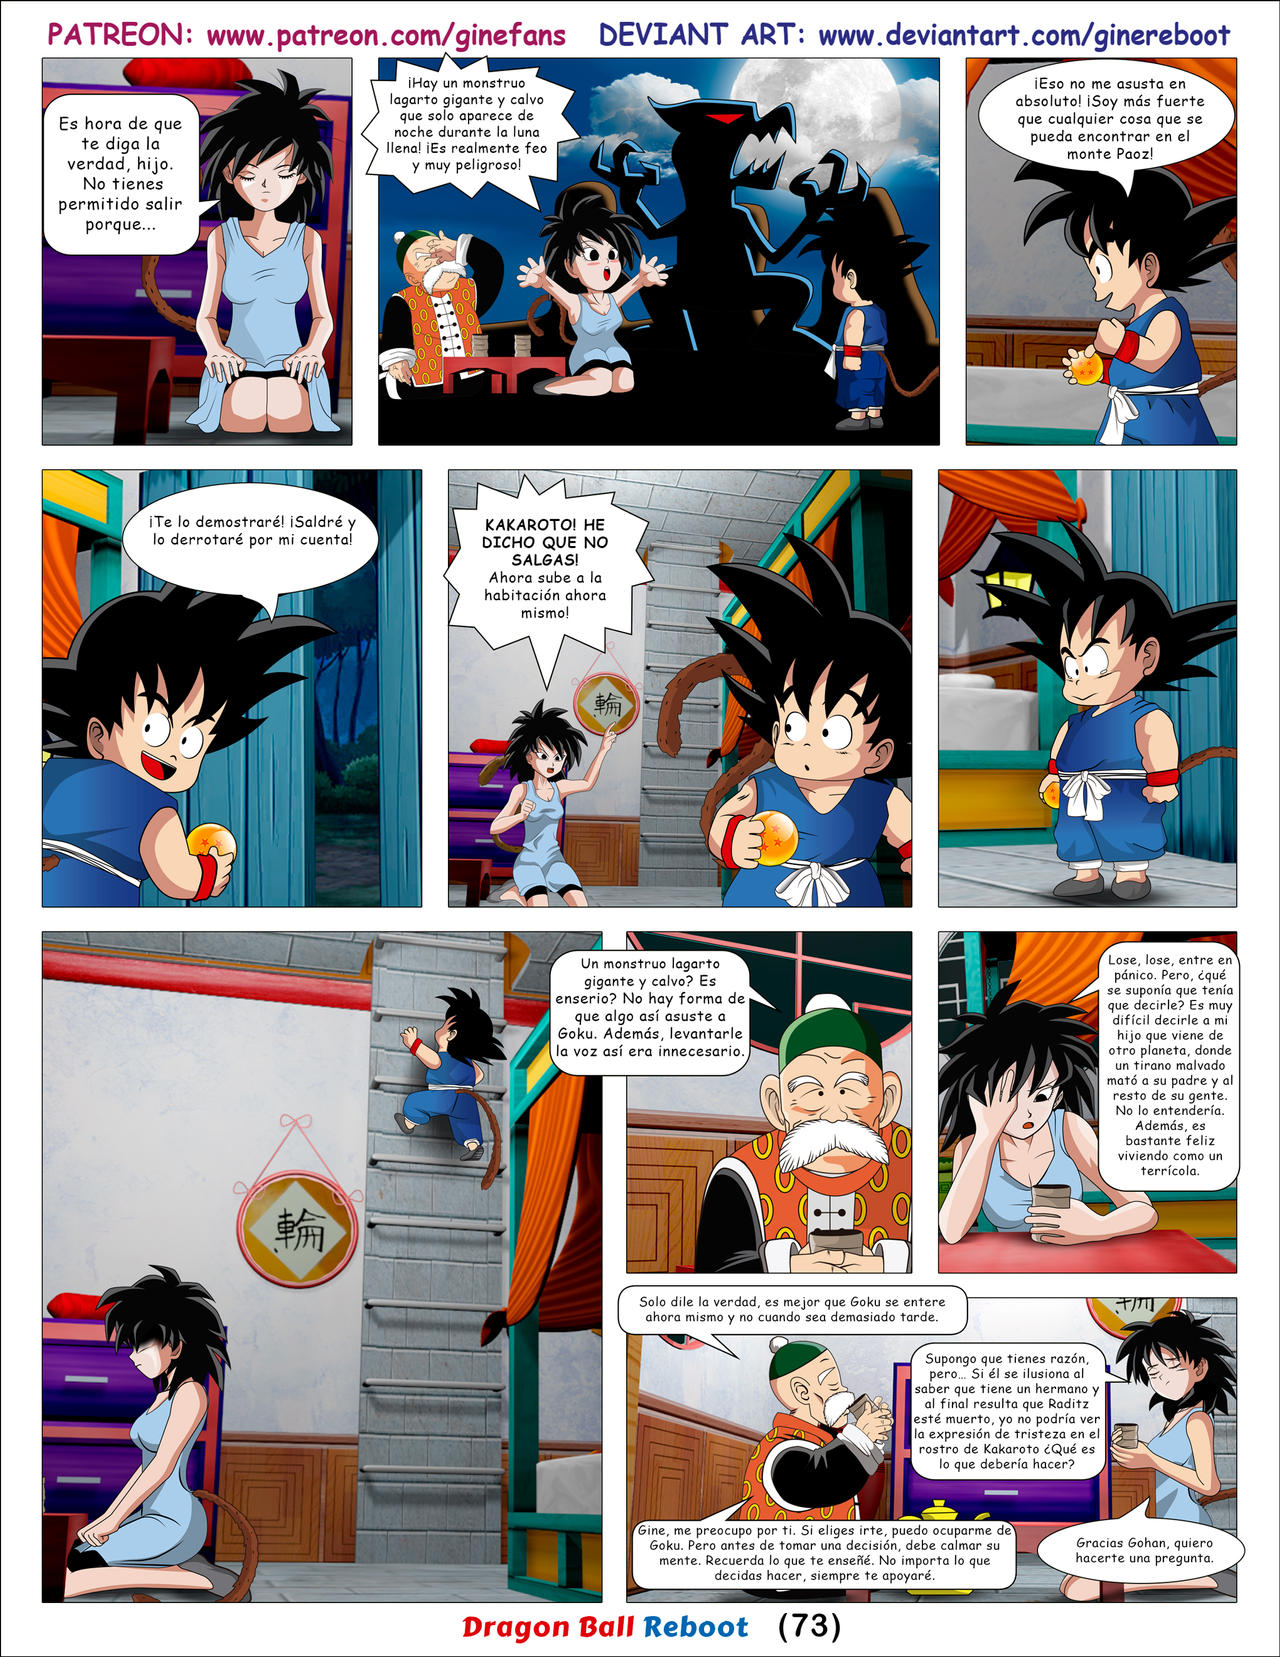 73 - Dragon Ball Reboot Comic 2 ESPANOL by GineReboot on DeviantArt